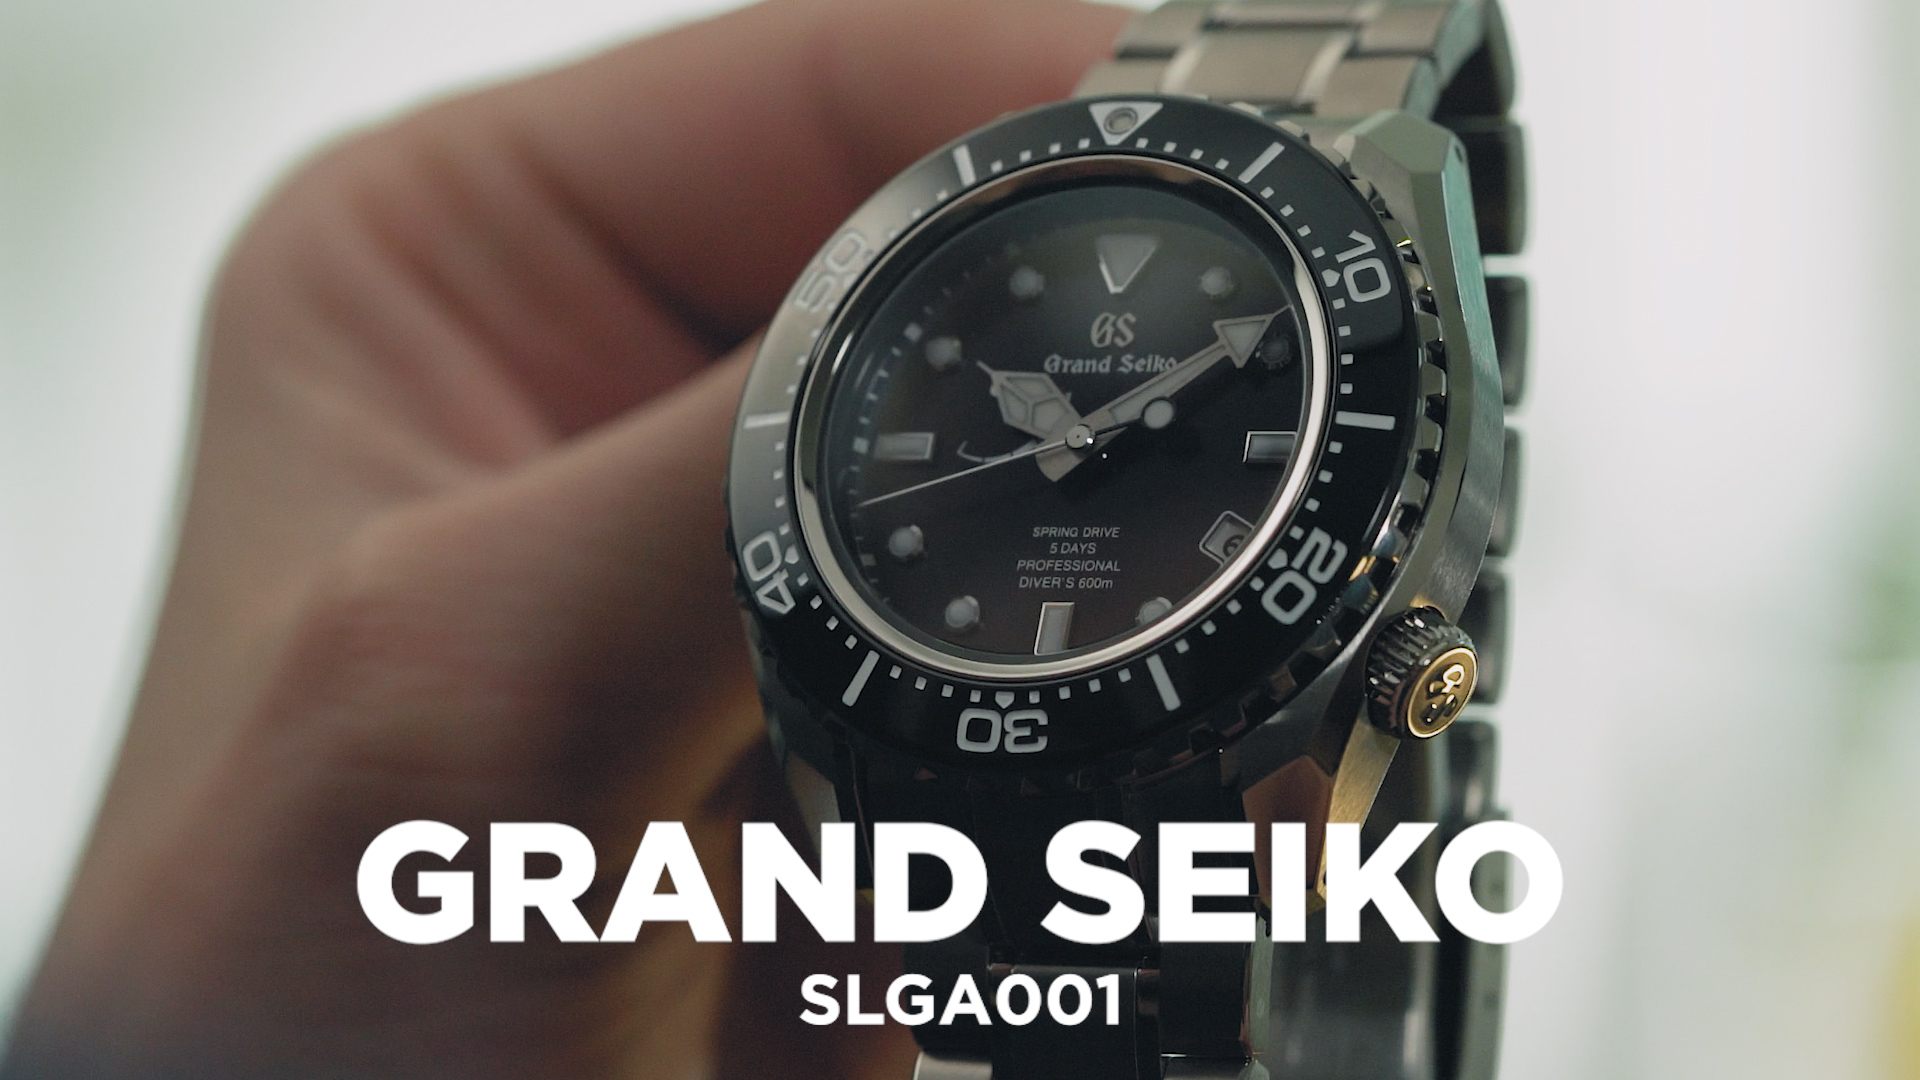 VIDEO: The Grand Seiko SLGA001 is big and brawny, but make no mistake, it has brains too